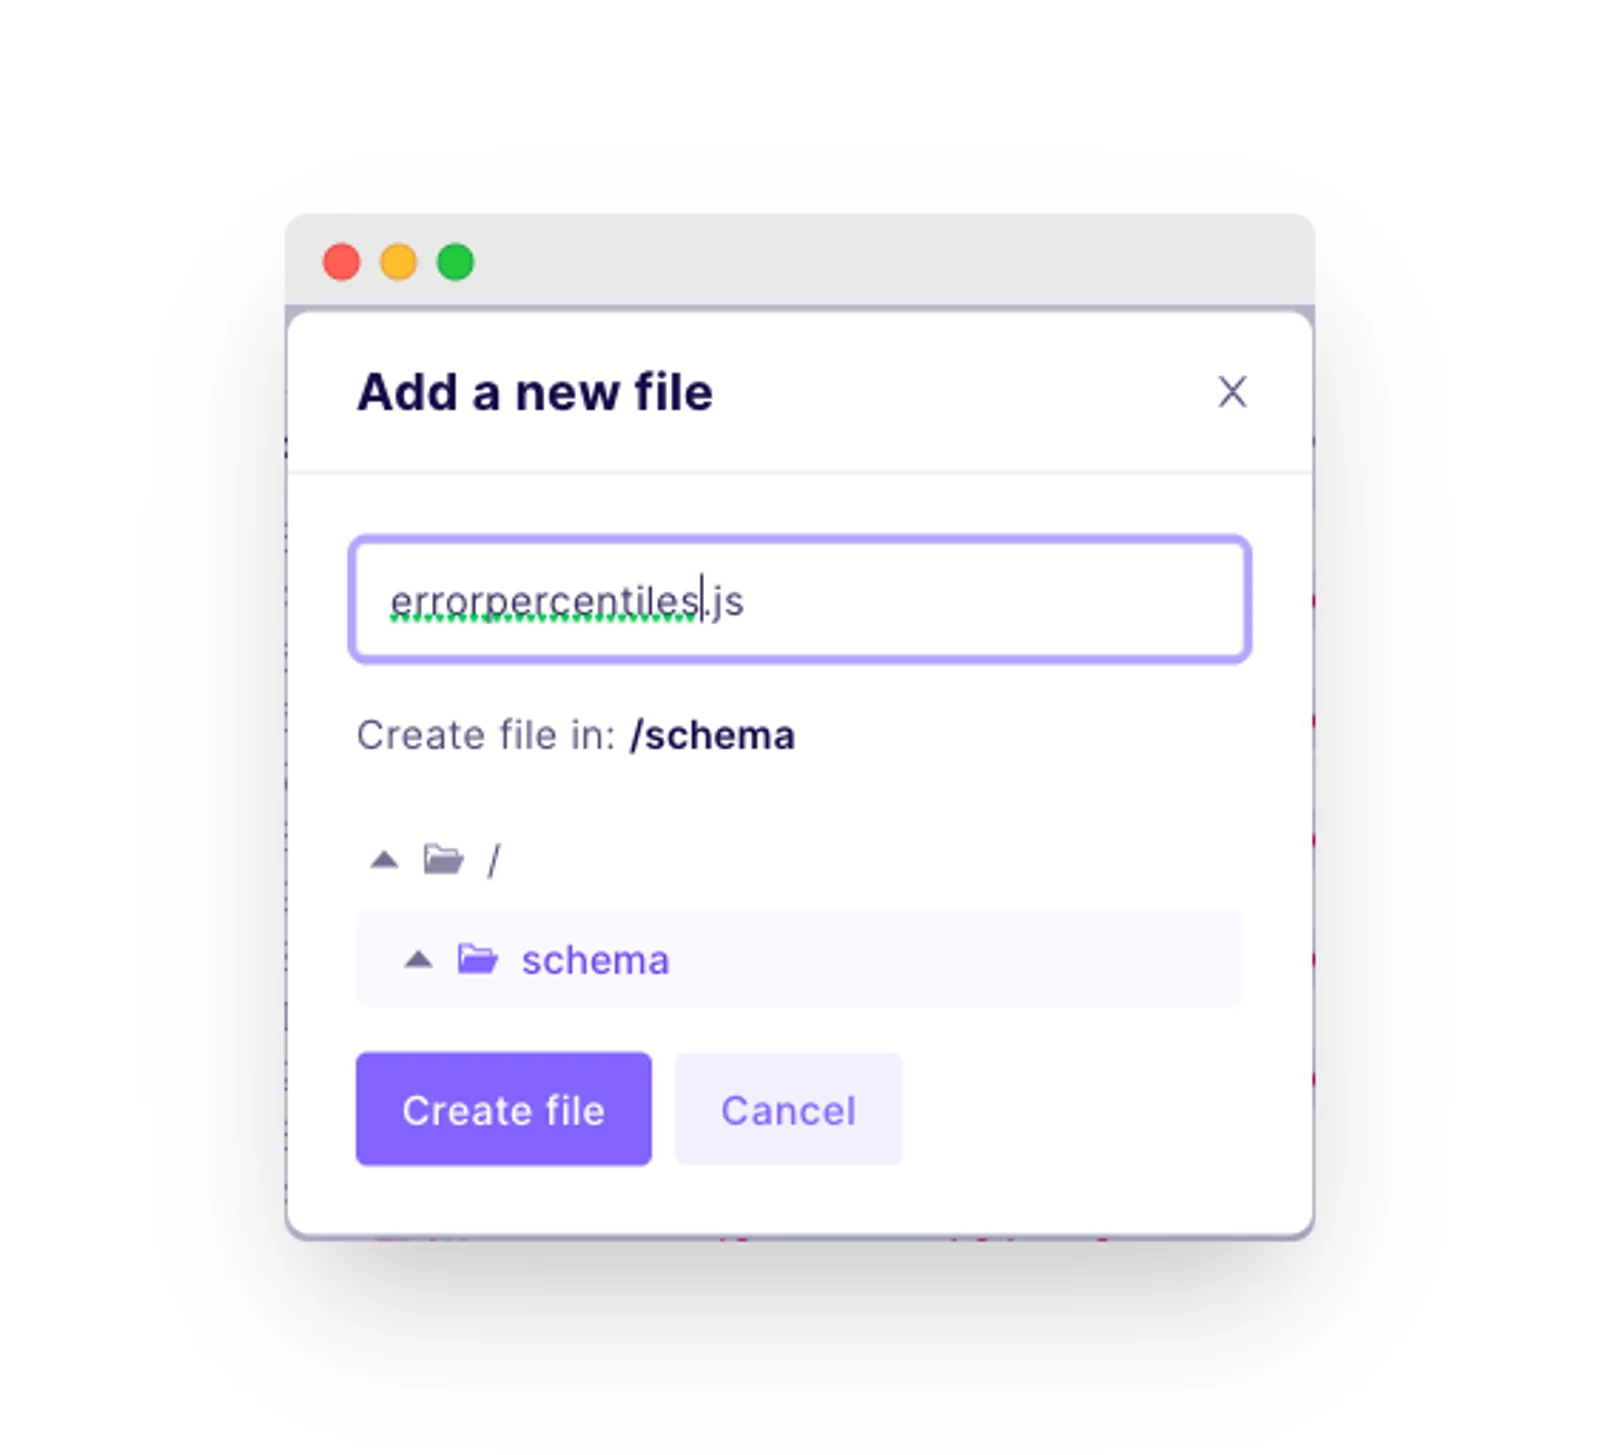 The “Add a new file” window.